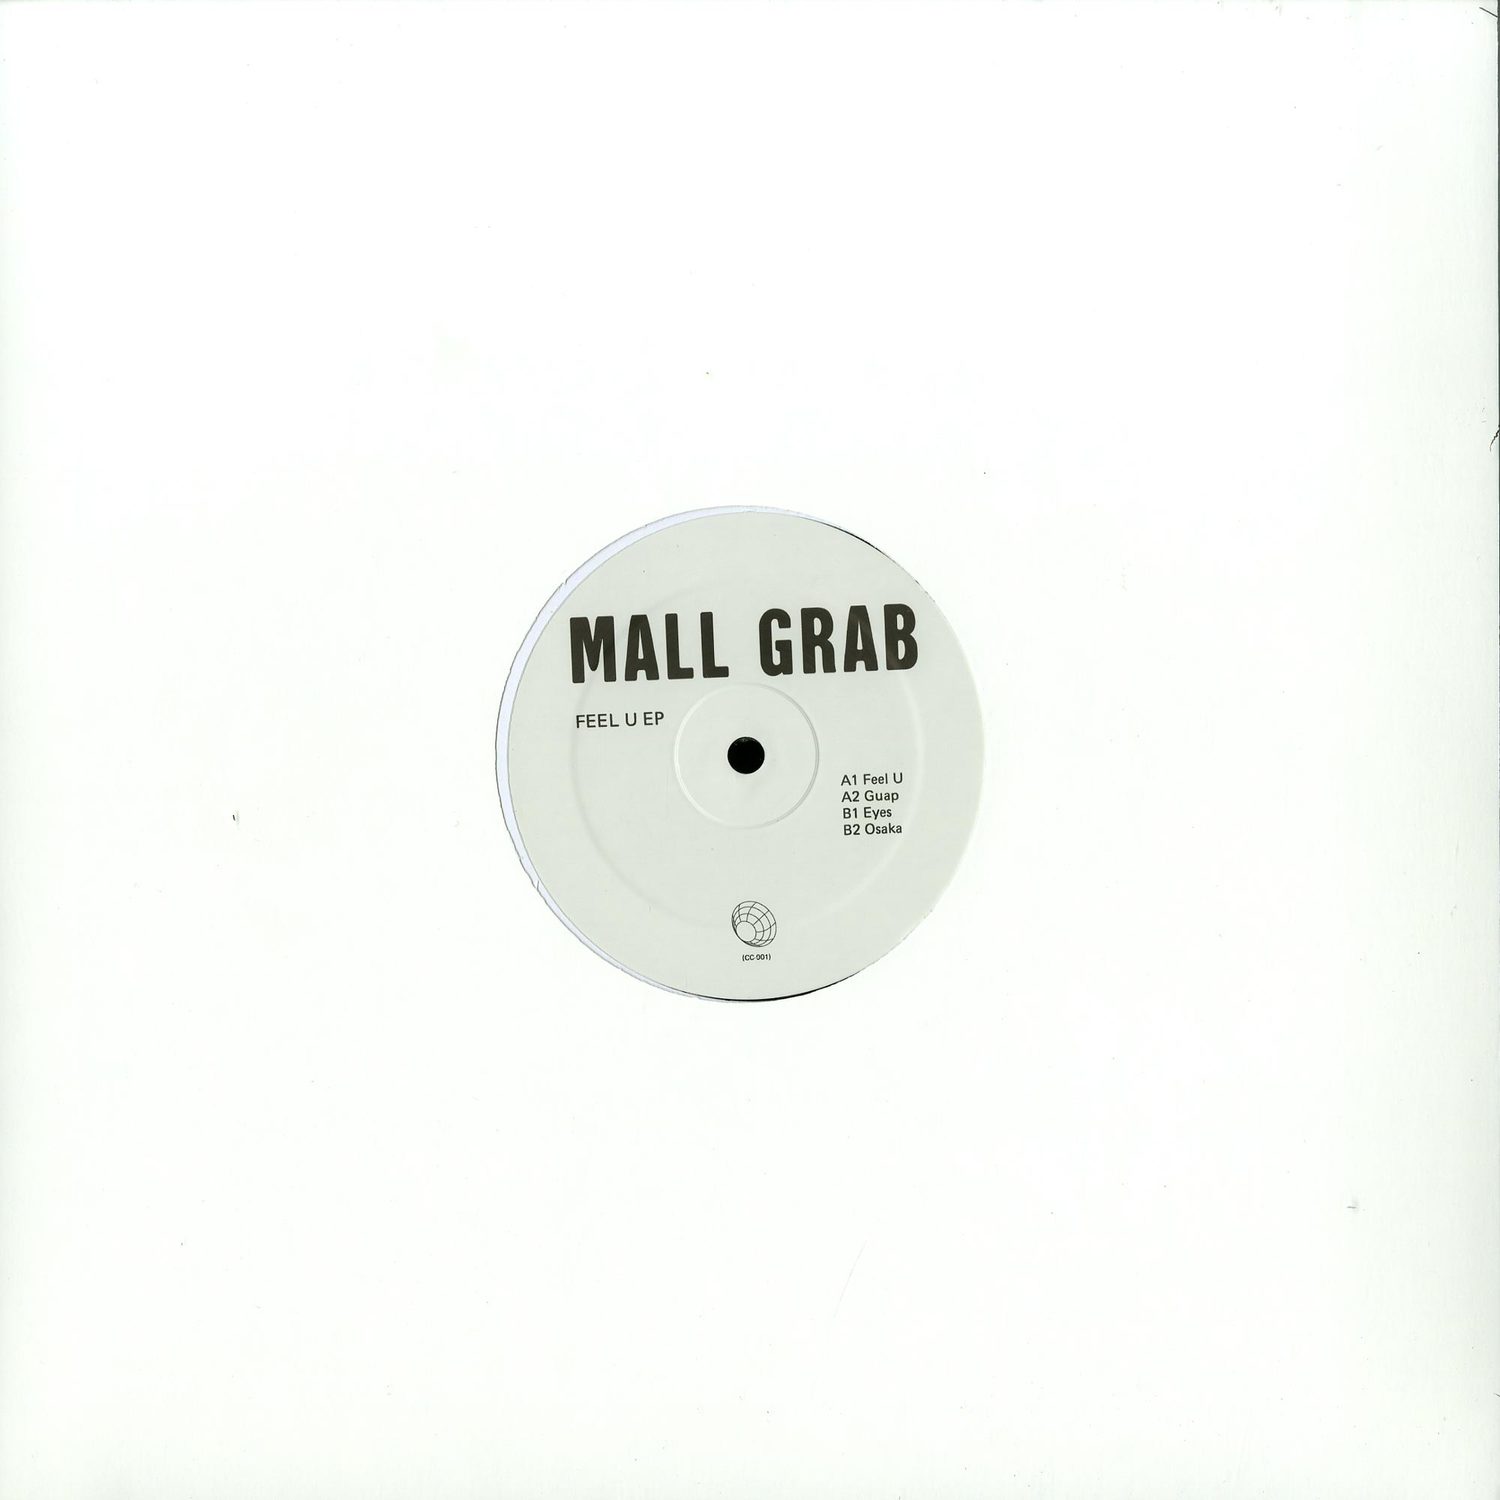 Mall Grab - FEEL U EP